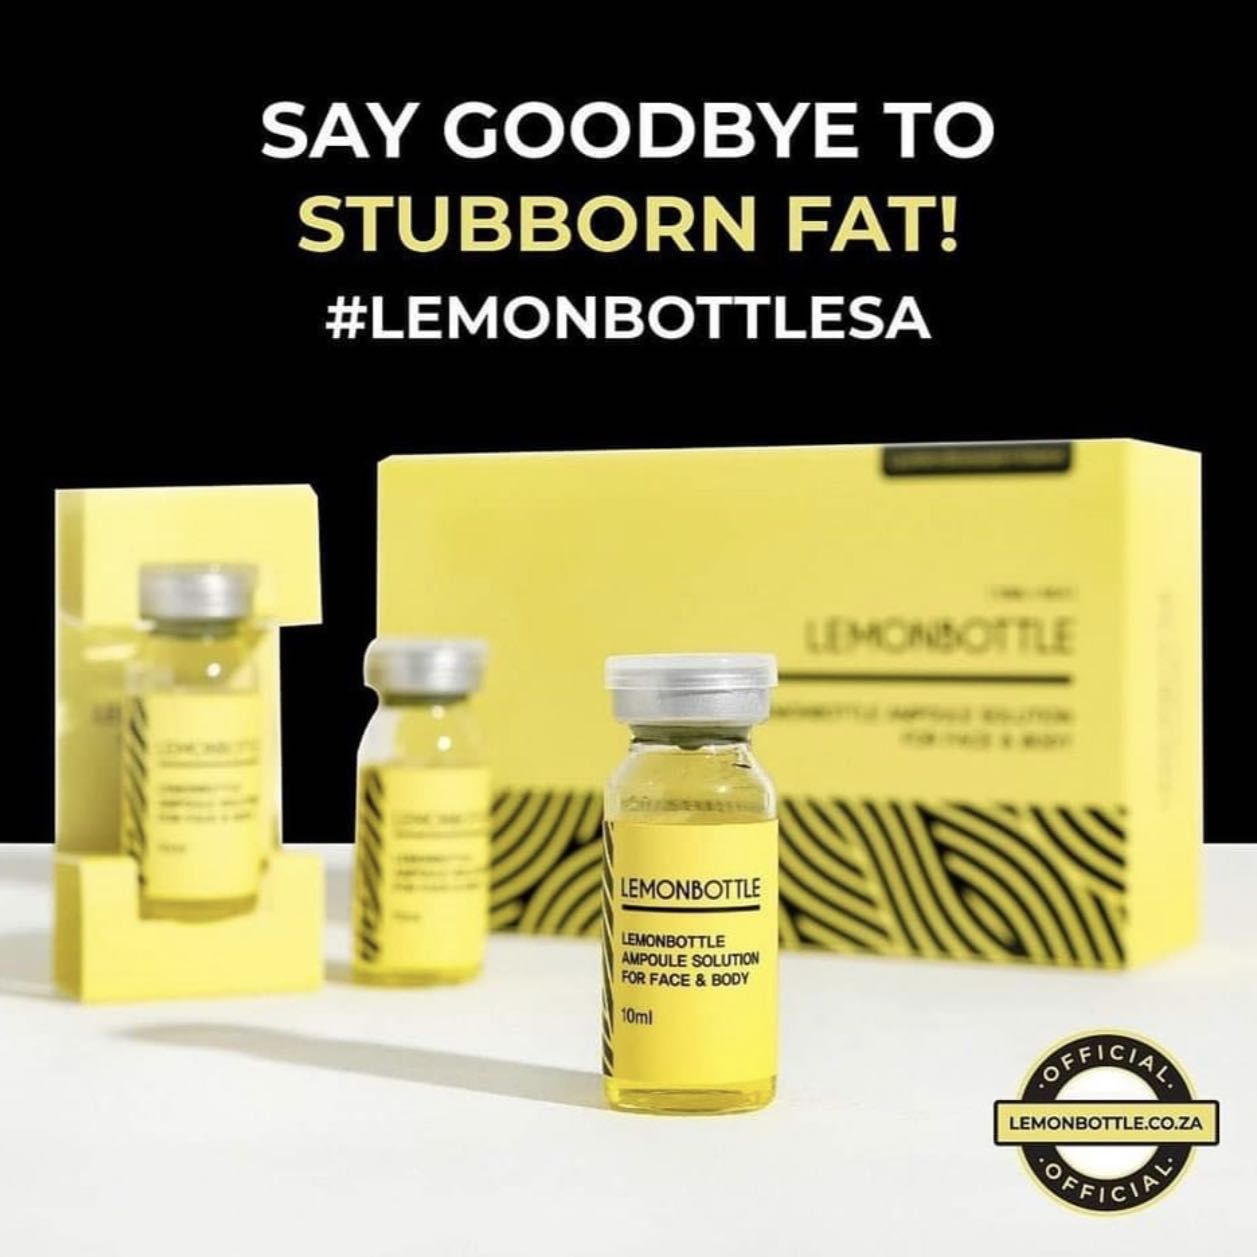 🍋 Lemon Bottle Fat dissolving injections BACK portfolio